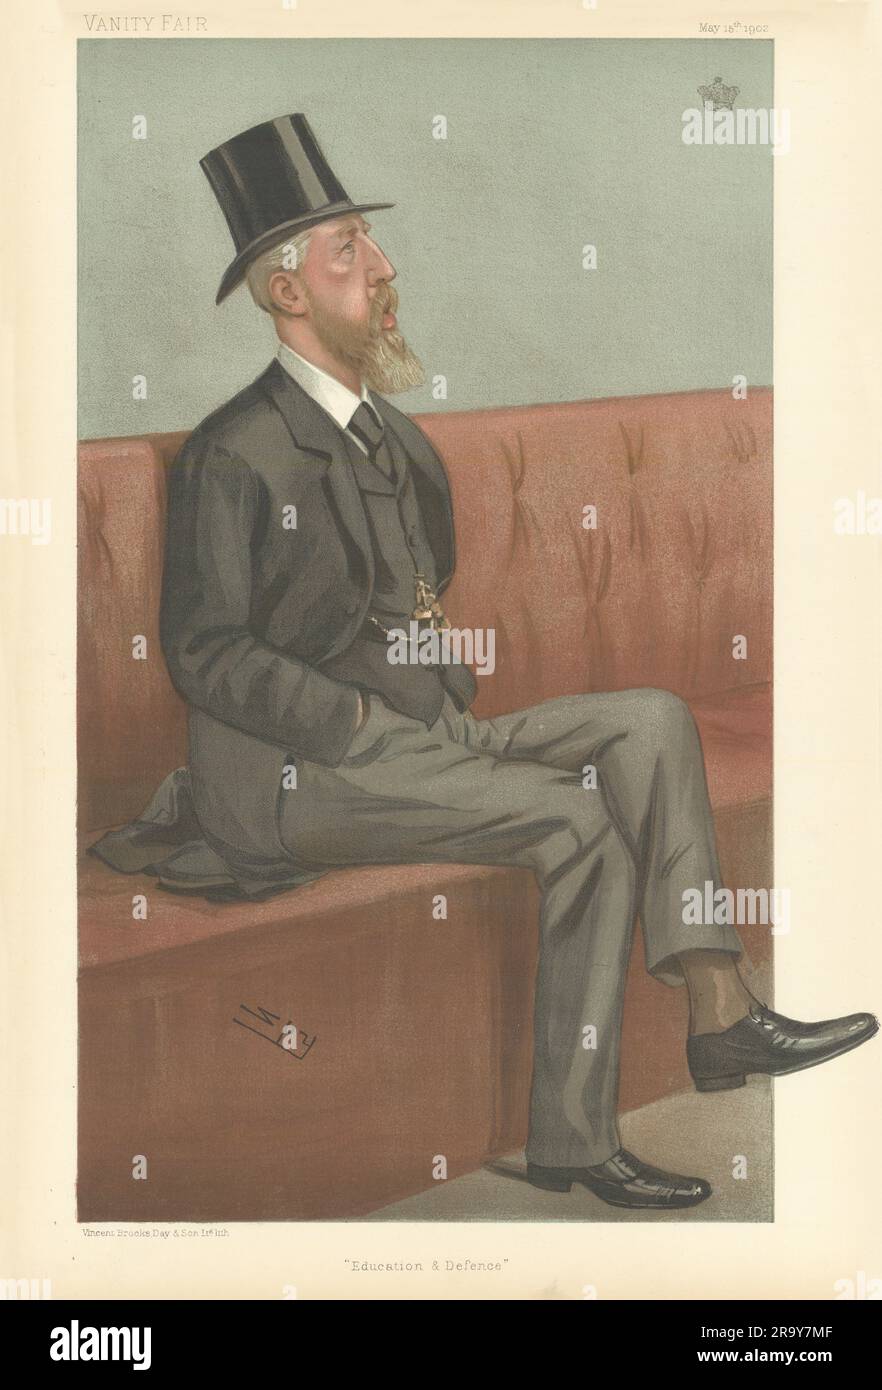 VANITY FAIR SPY CARTOON 8th Duke of Devonshire 'Education & Defence' 1902 Stock Photo